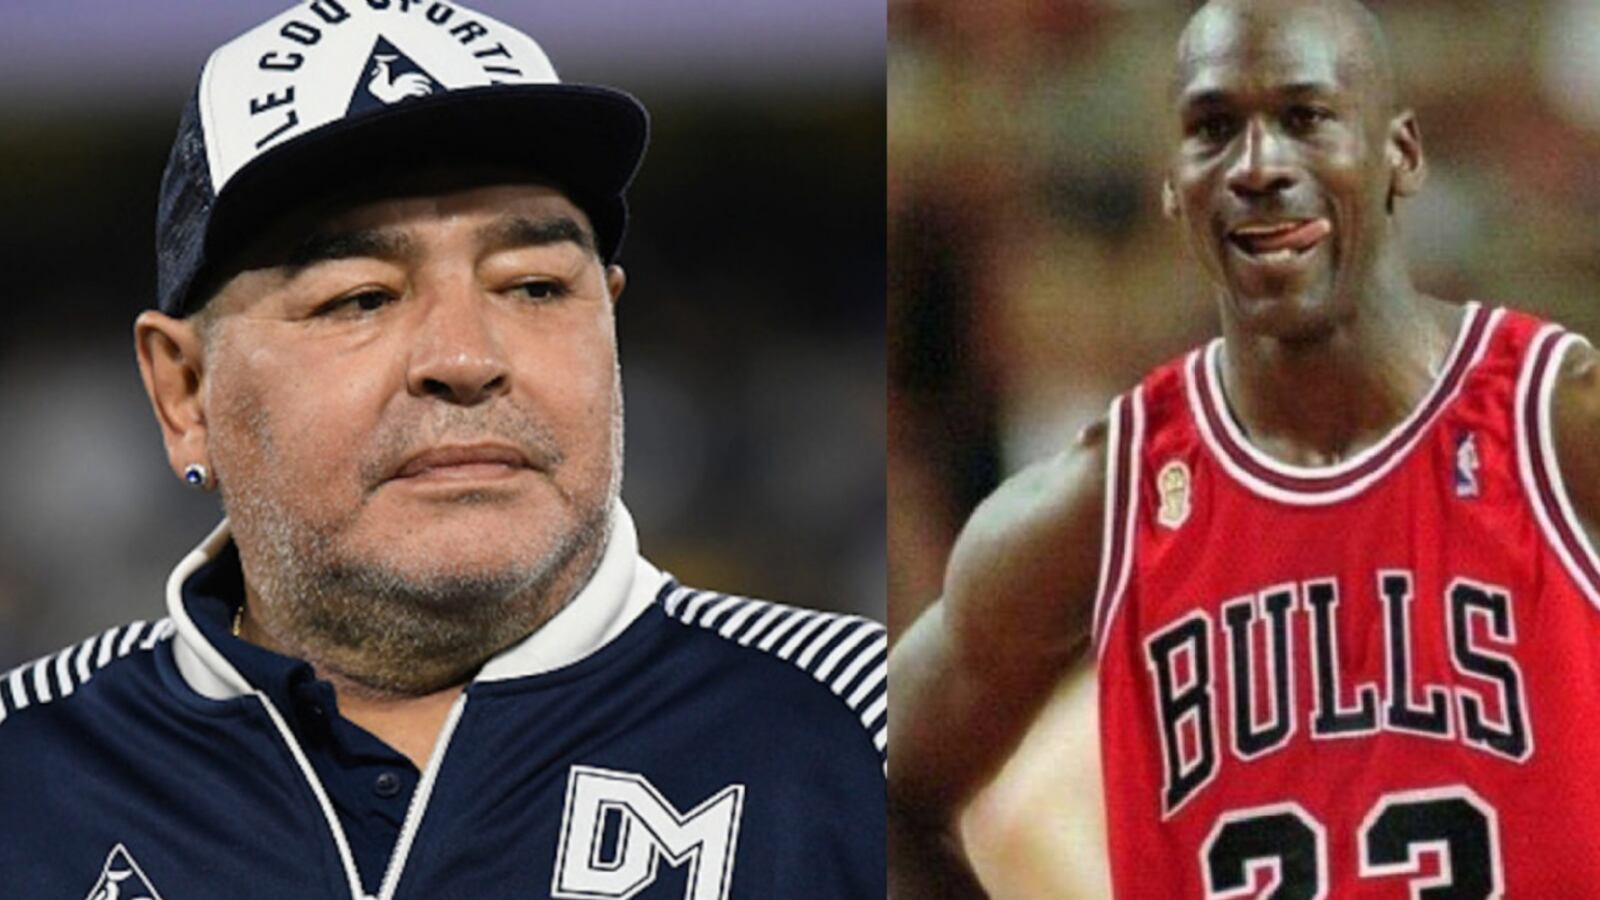 La furia de Diego Armando Maradona con Michael Jordan